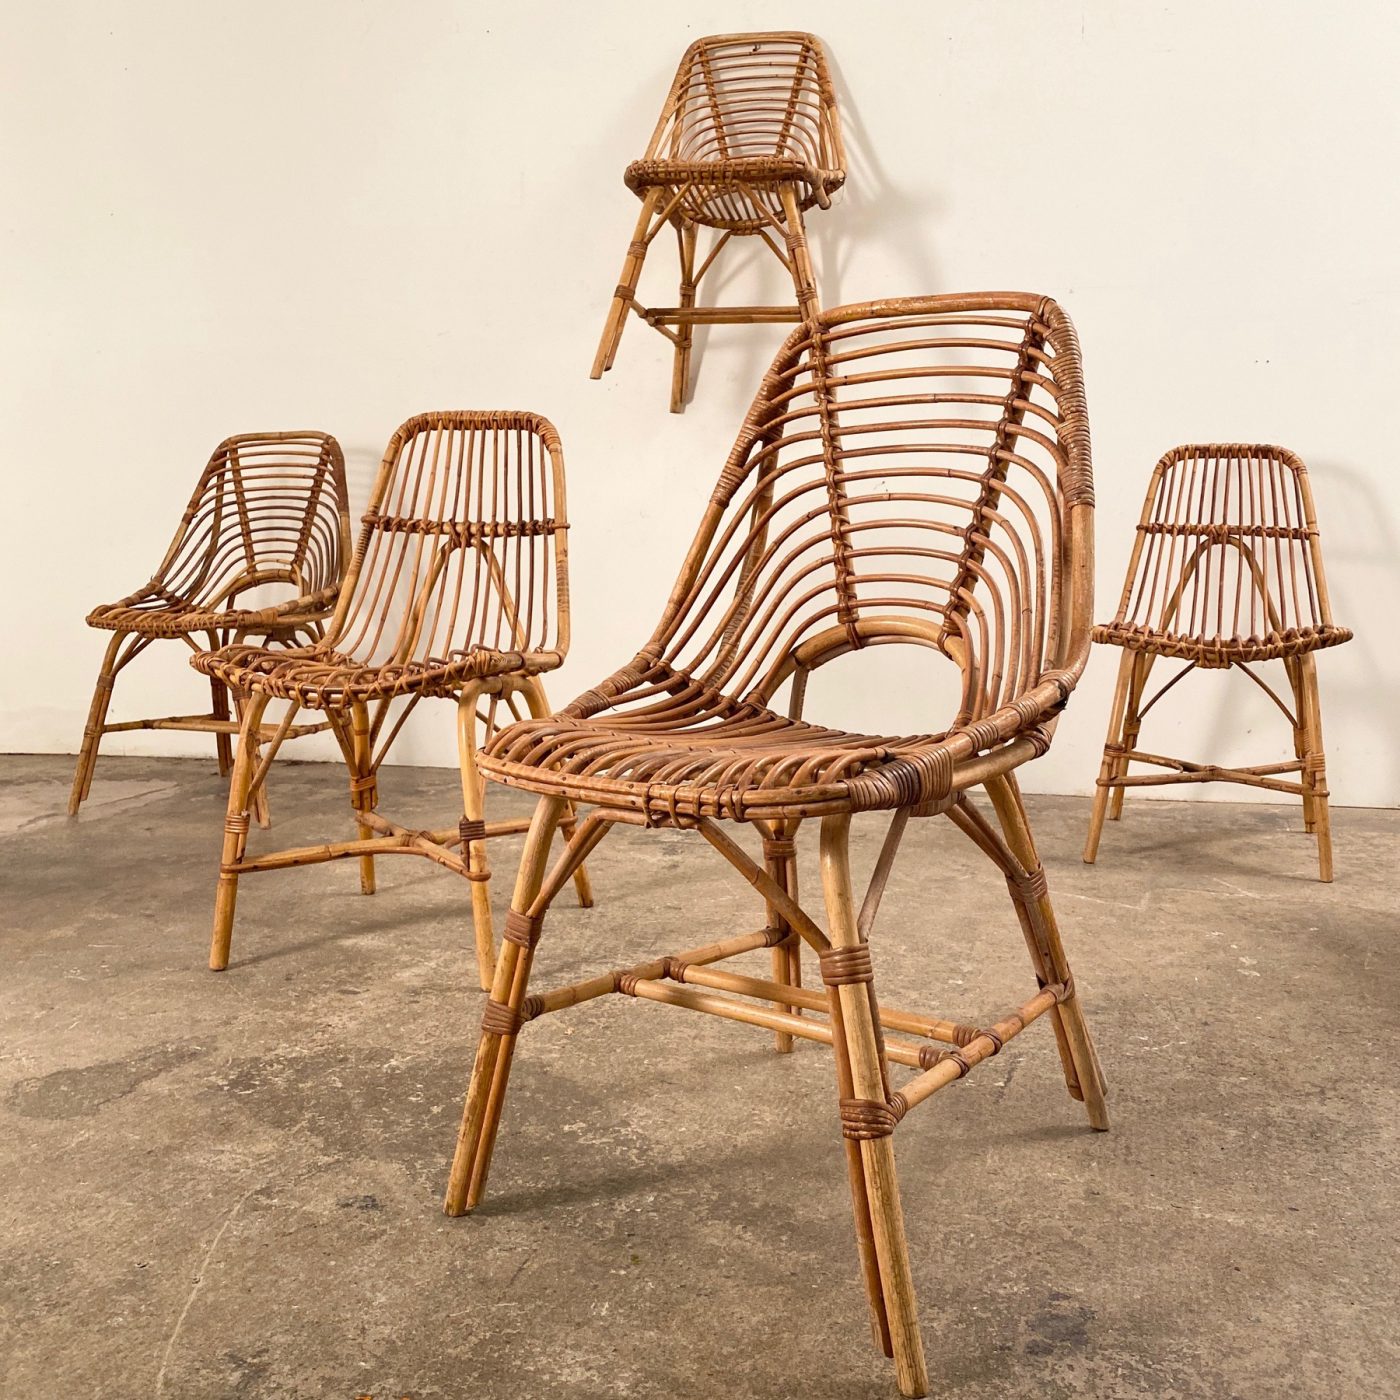 objet-vagabond-rattan-chairs0006